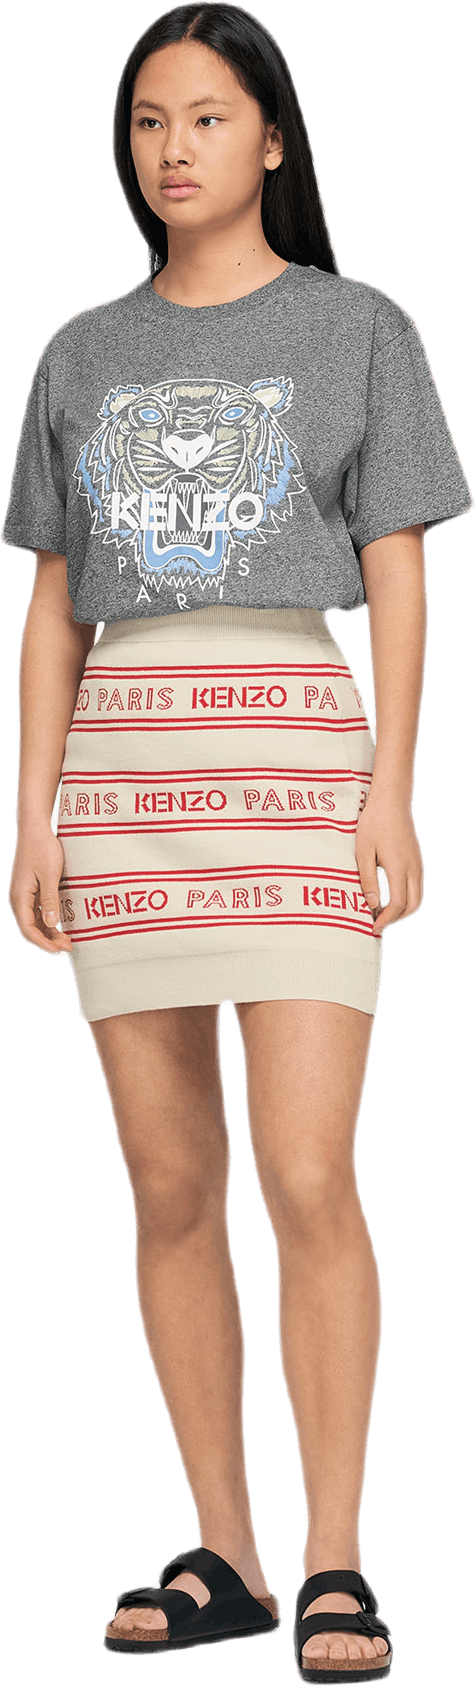 Kenzo Paris Skirt White